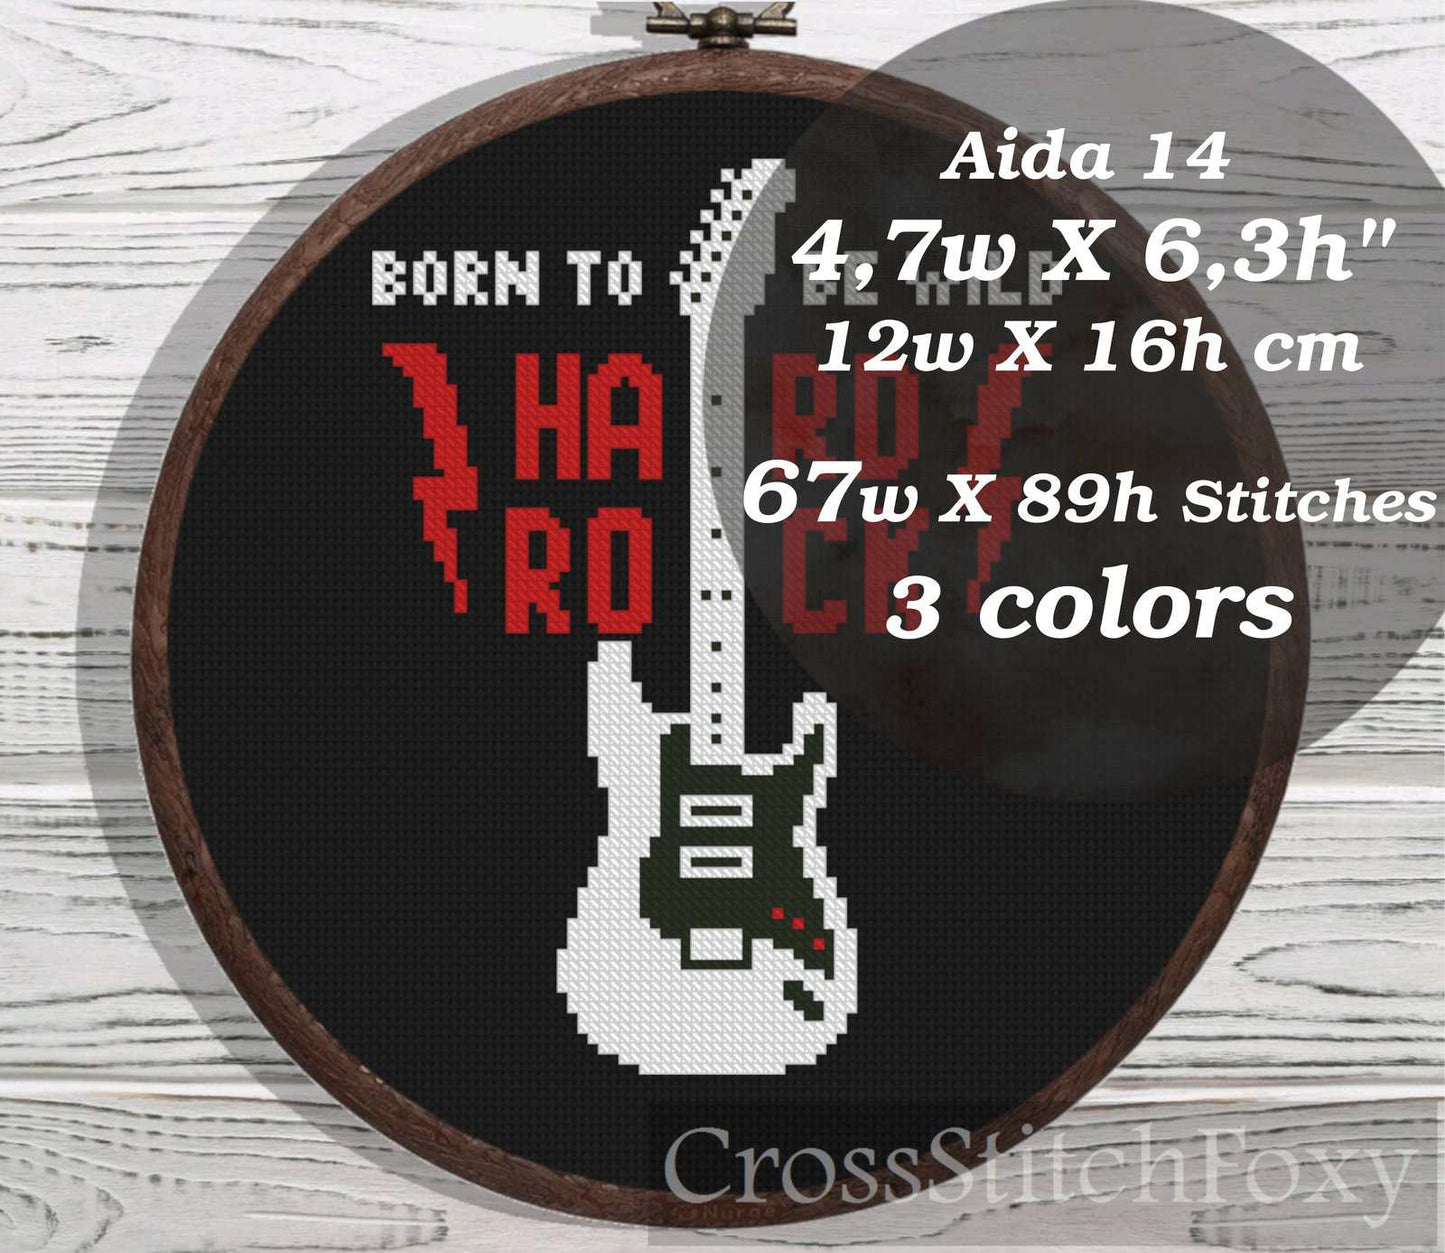 Hard Rock Guitar cross stitch pattern